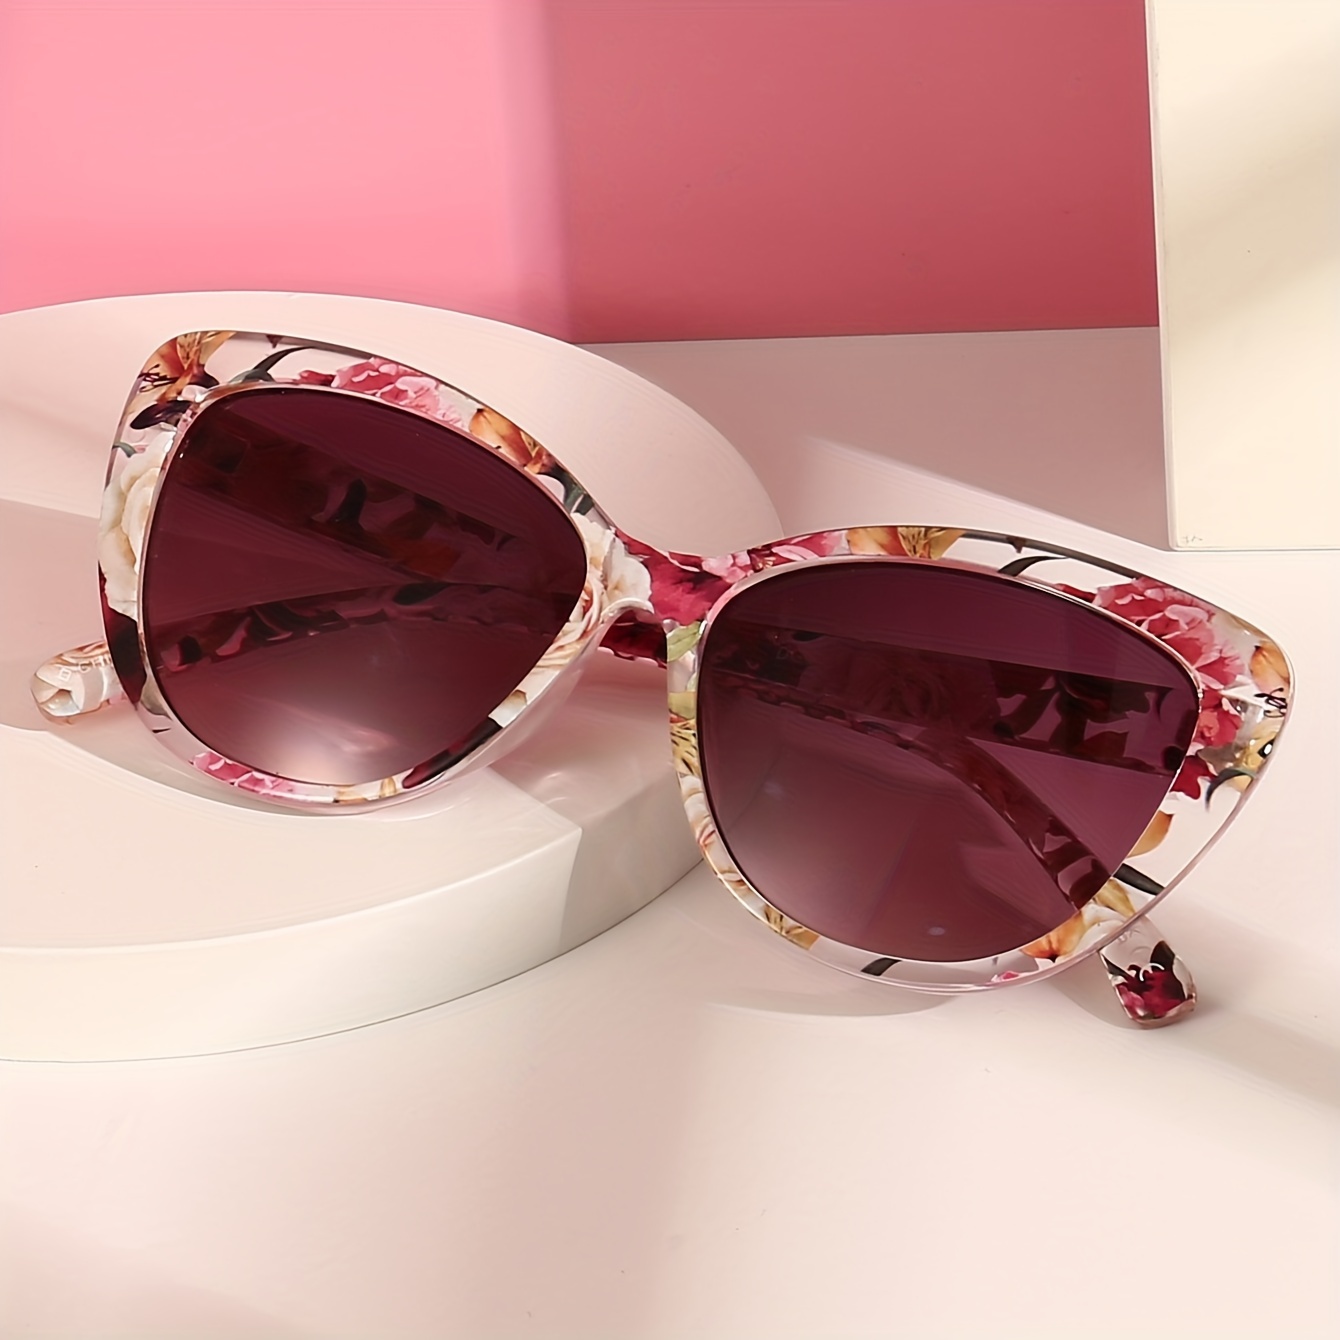 

Leopard Frame Fashion Glasses For Women Men Anti Glare Sun Shades Glasses For Driving Beach Travel